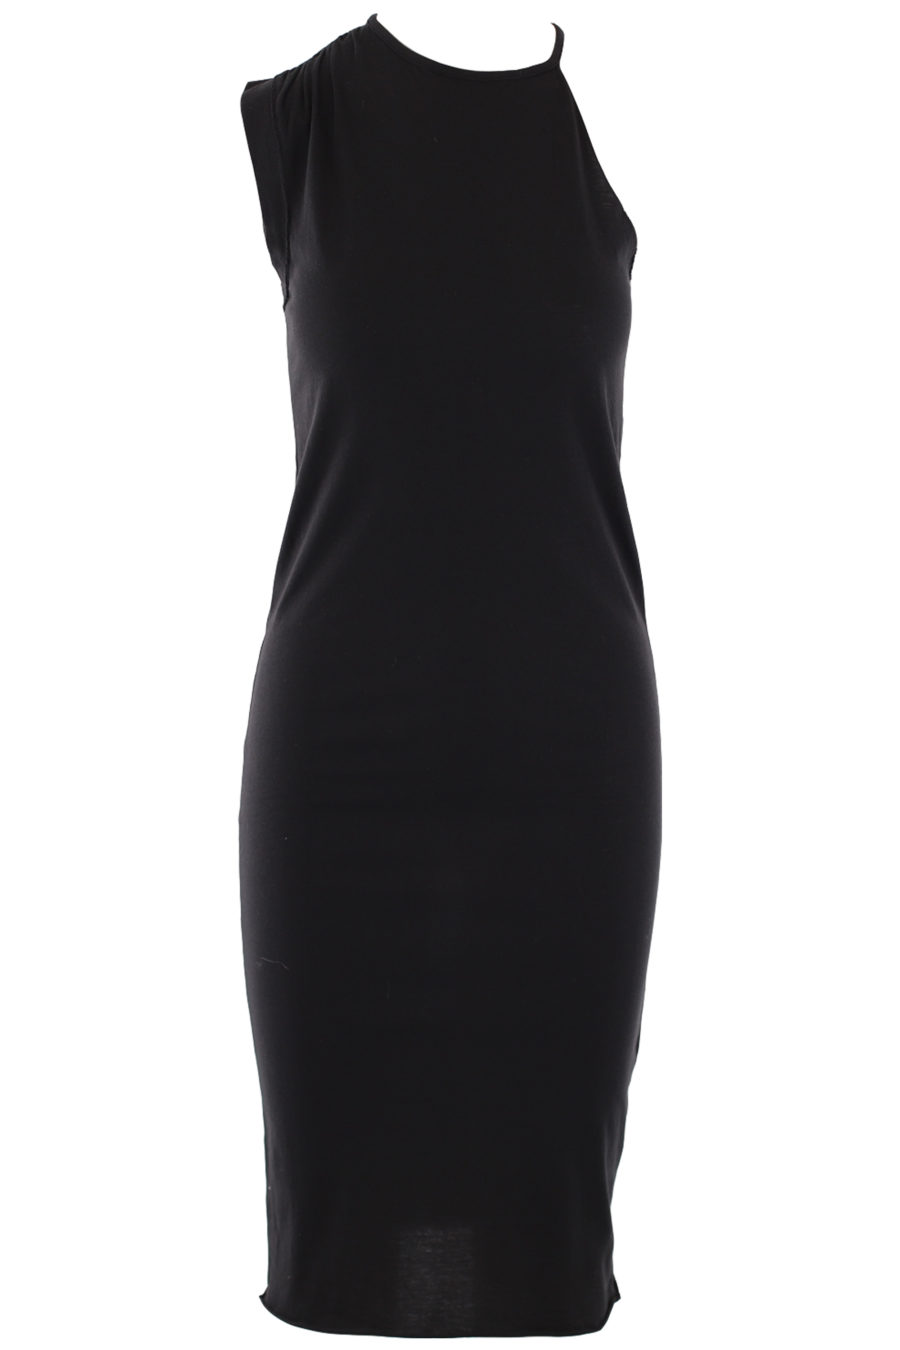 Long black dress - IMG 0715